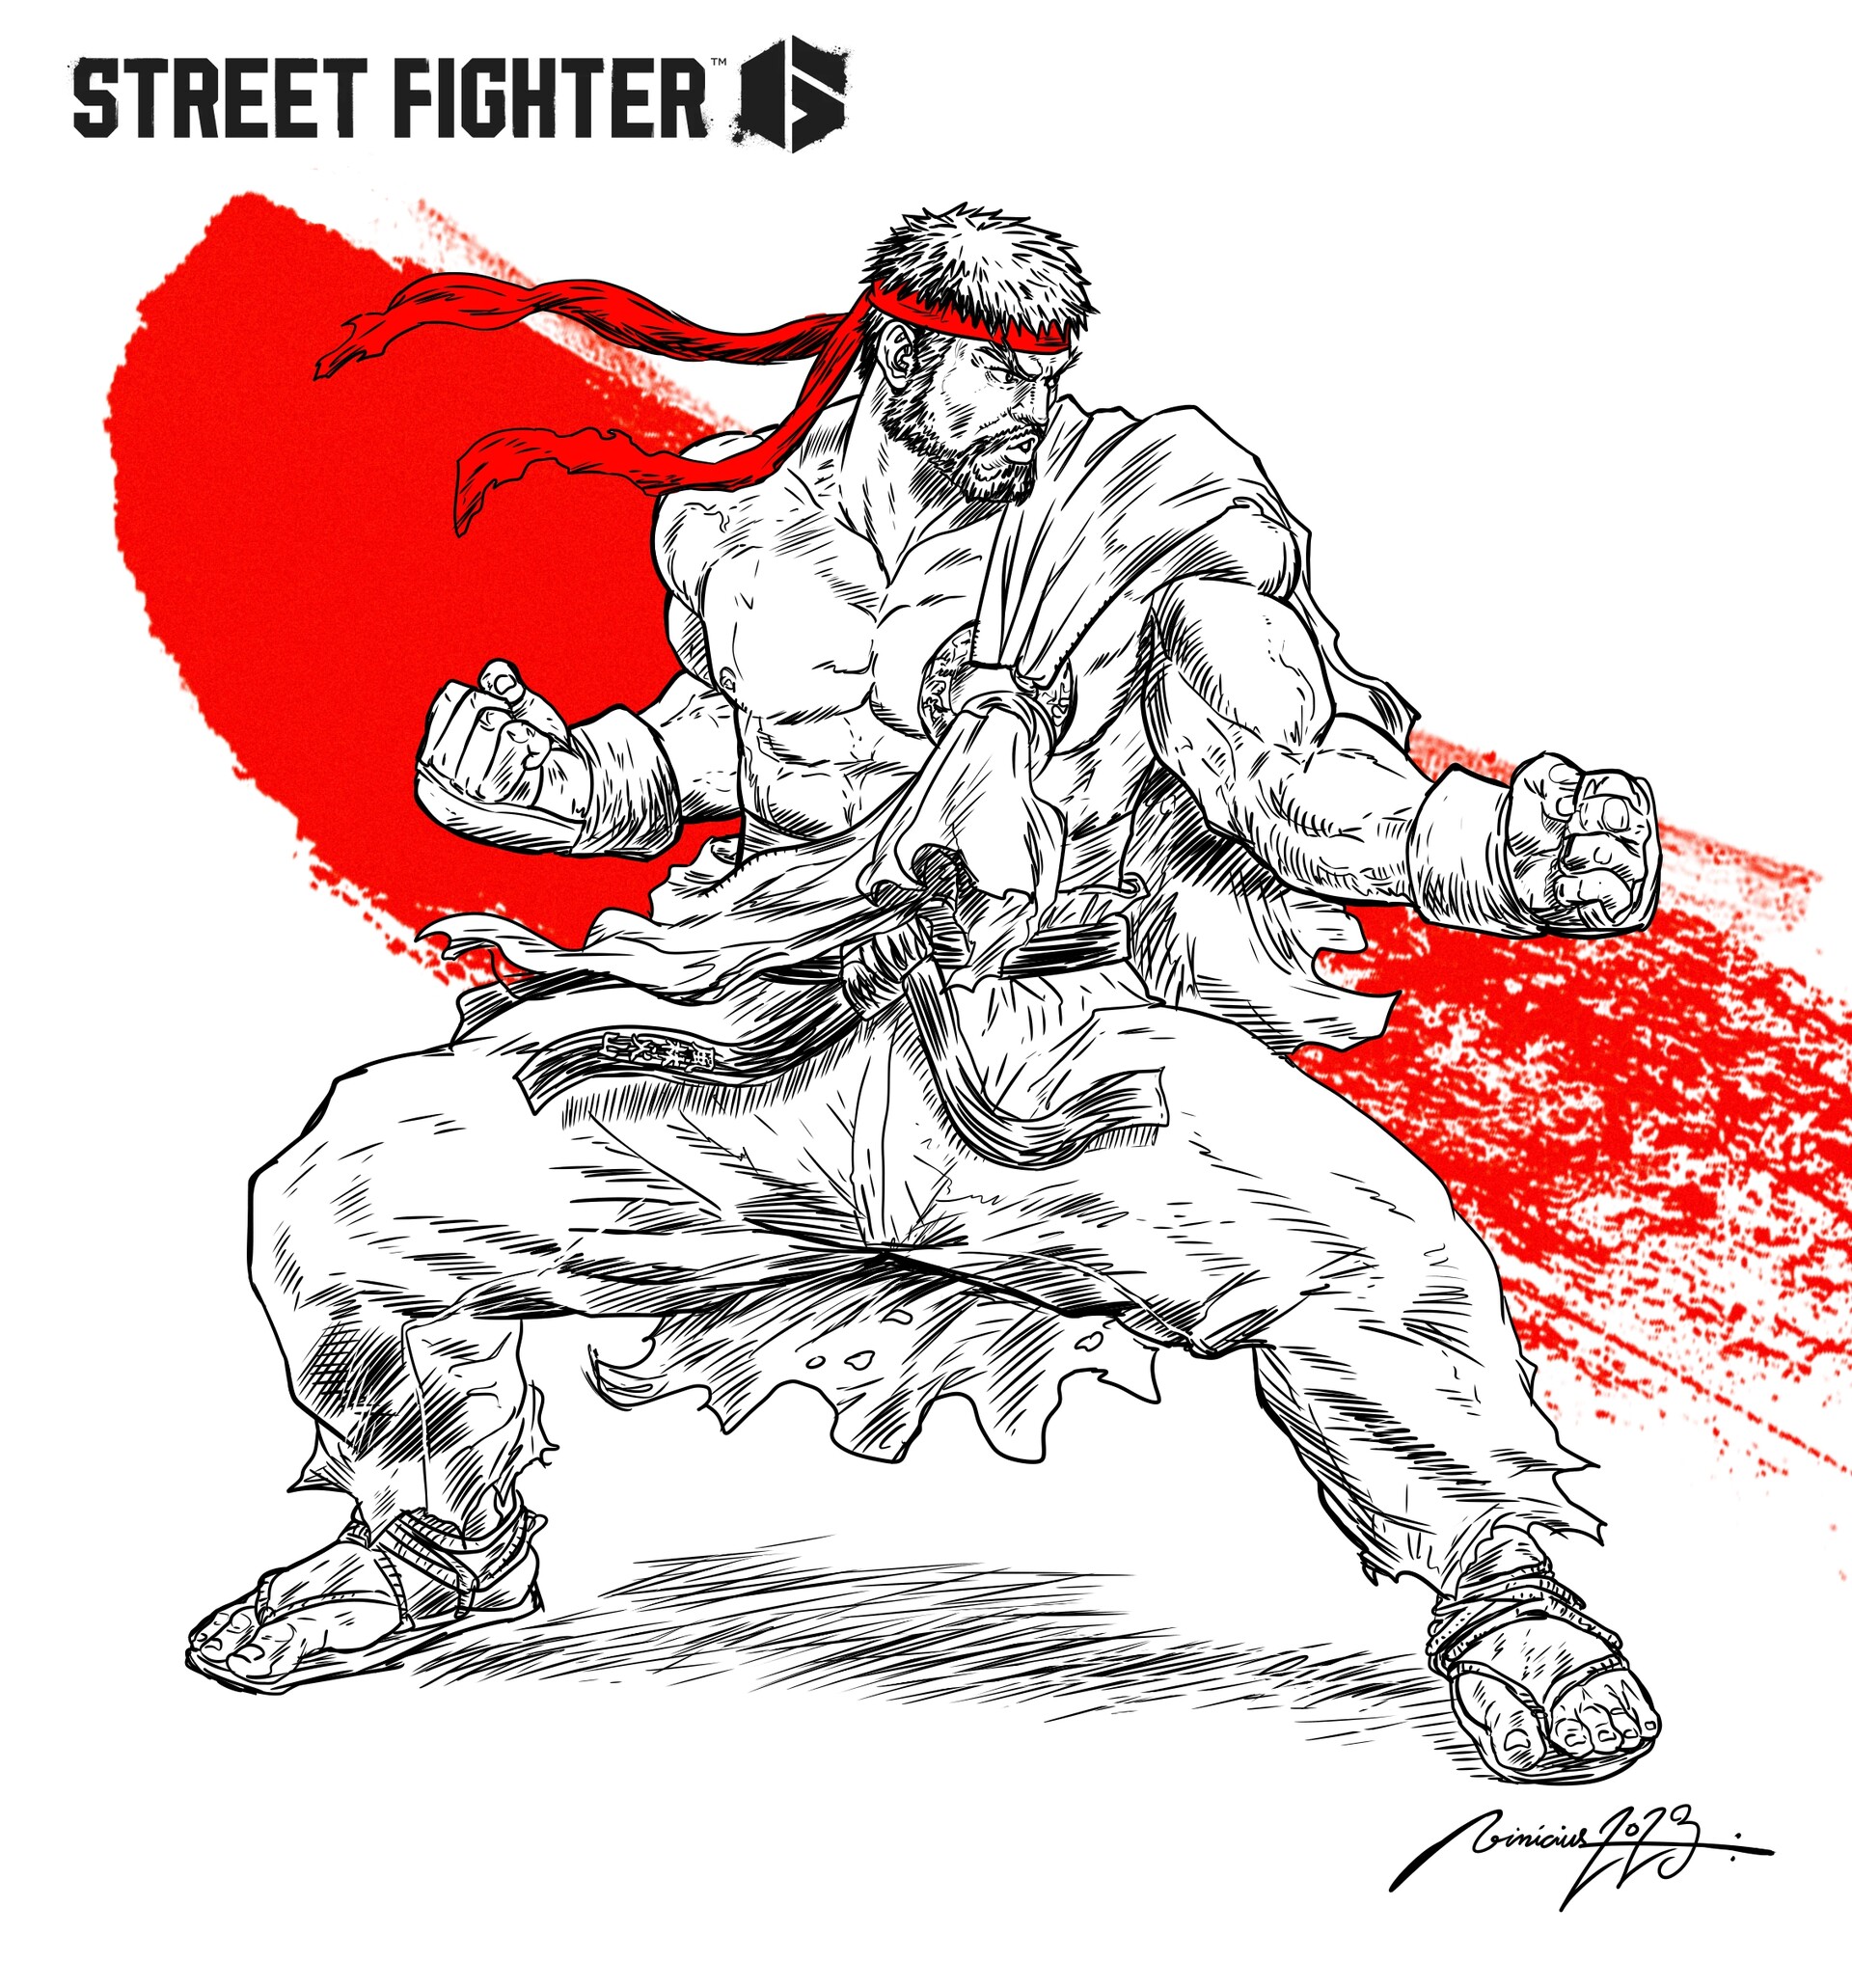 ArtStation - RYU Street Fighter 6 reimagined in 2D